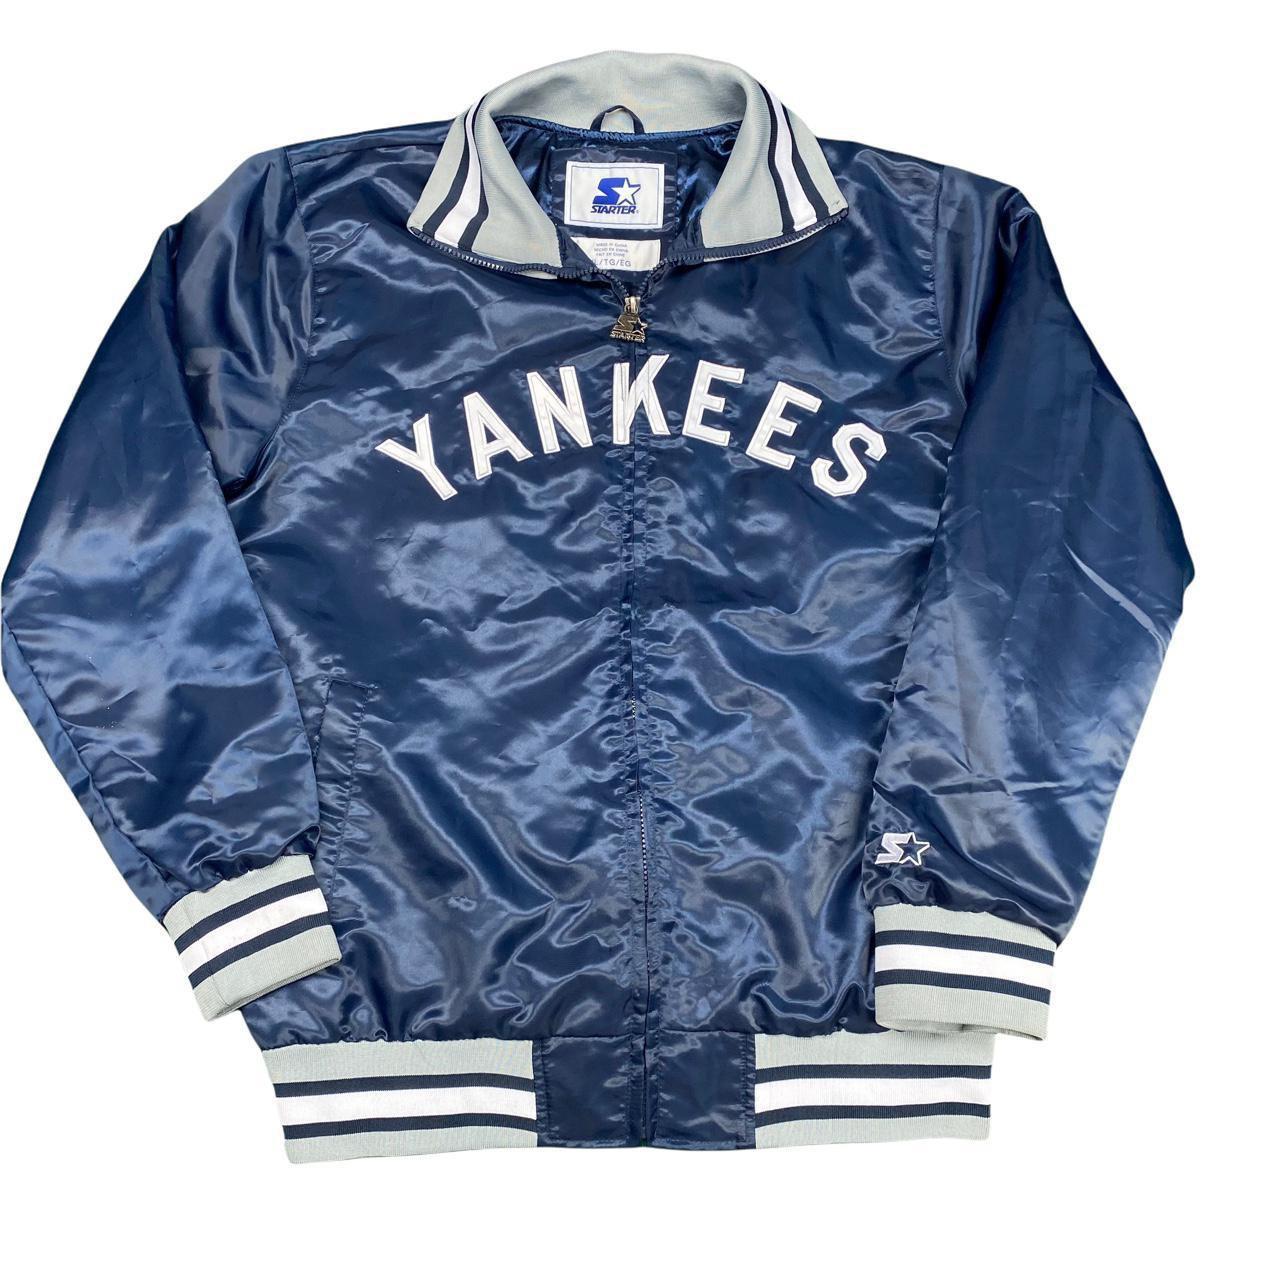 Yankee bomber jacket - Gem